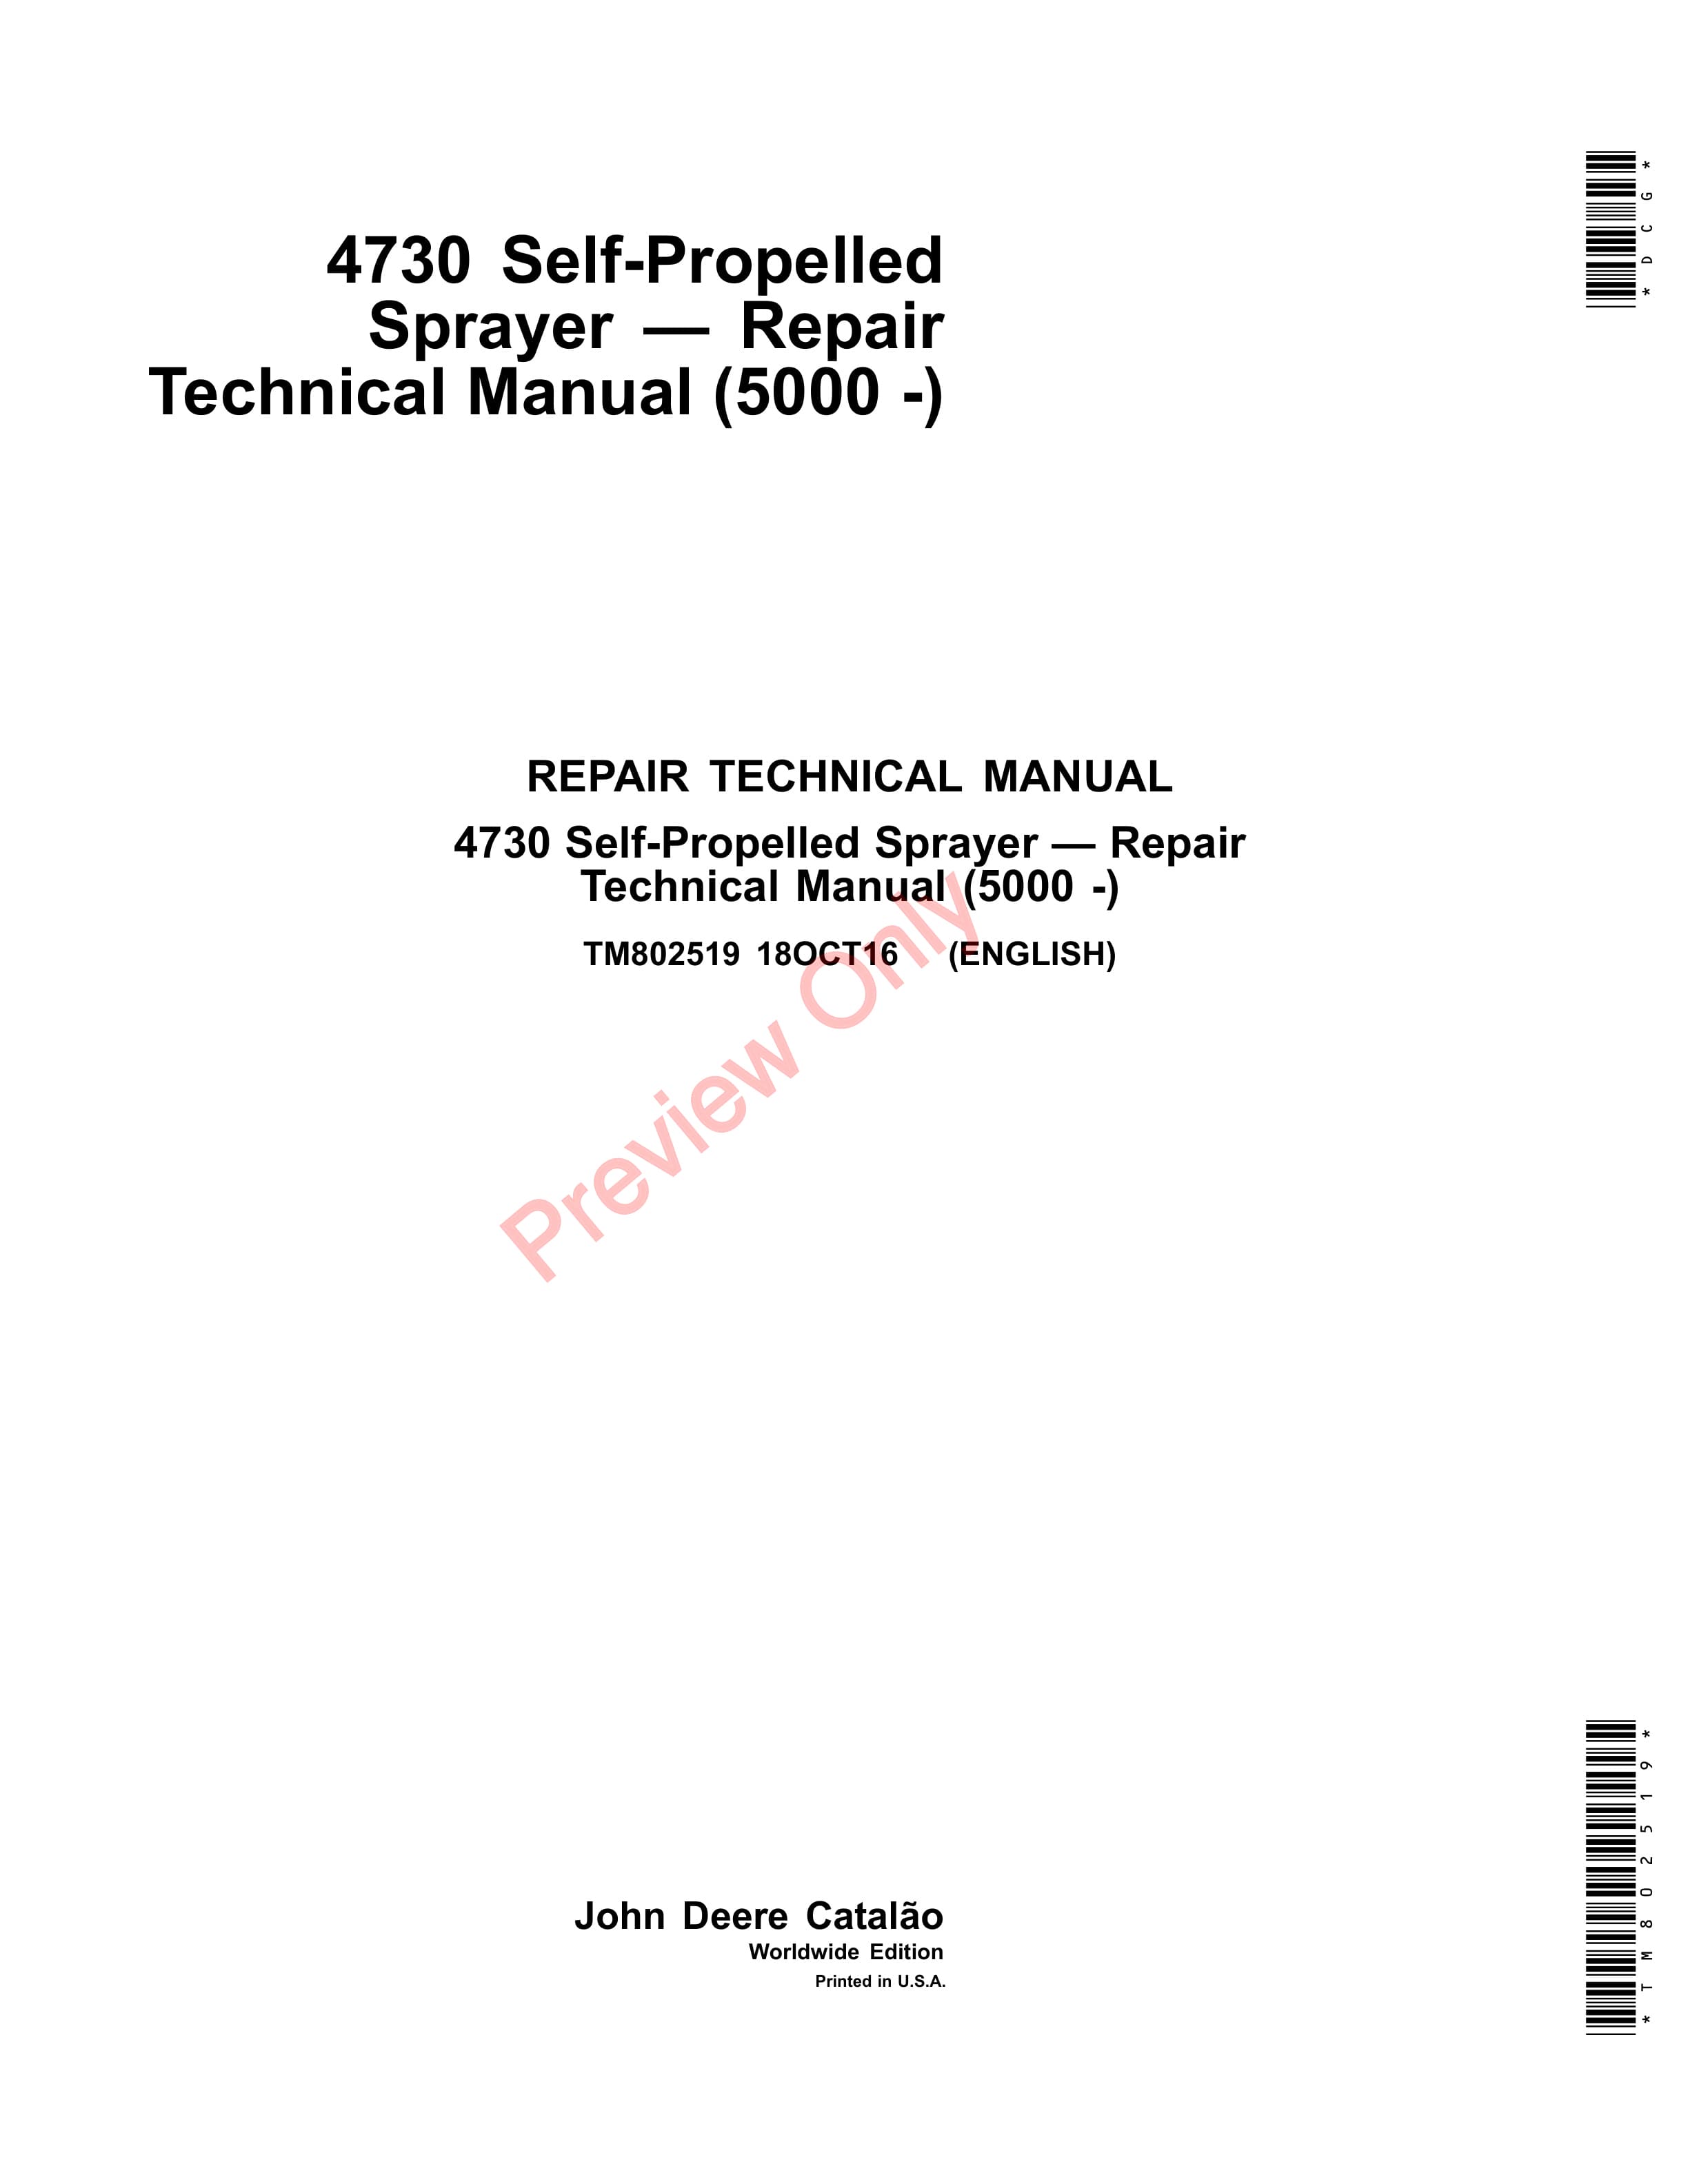 John Deere 4730 Self Propelled Sprayer Technical Manual TM802519 18OCT16 1